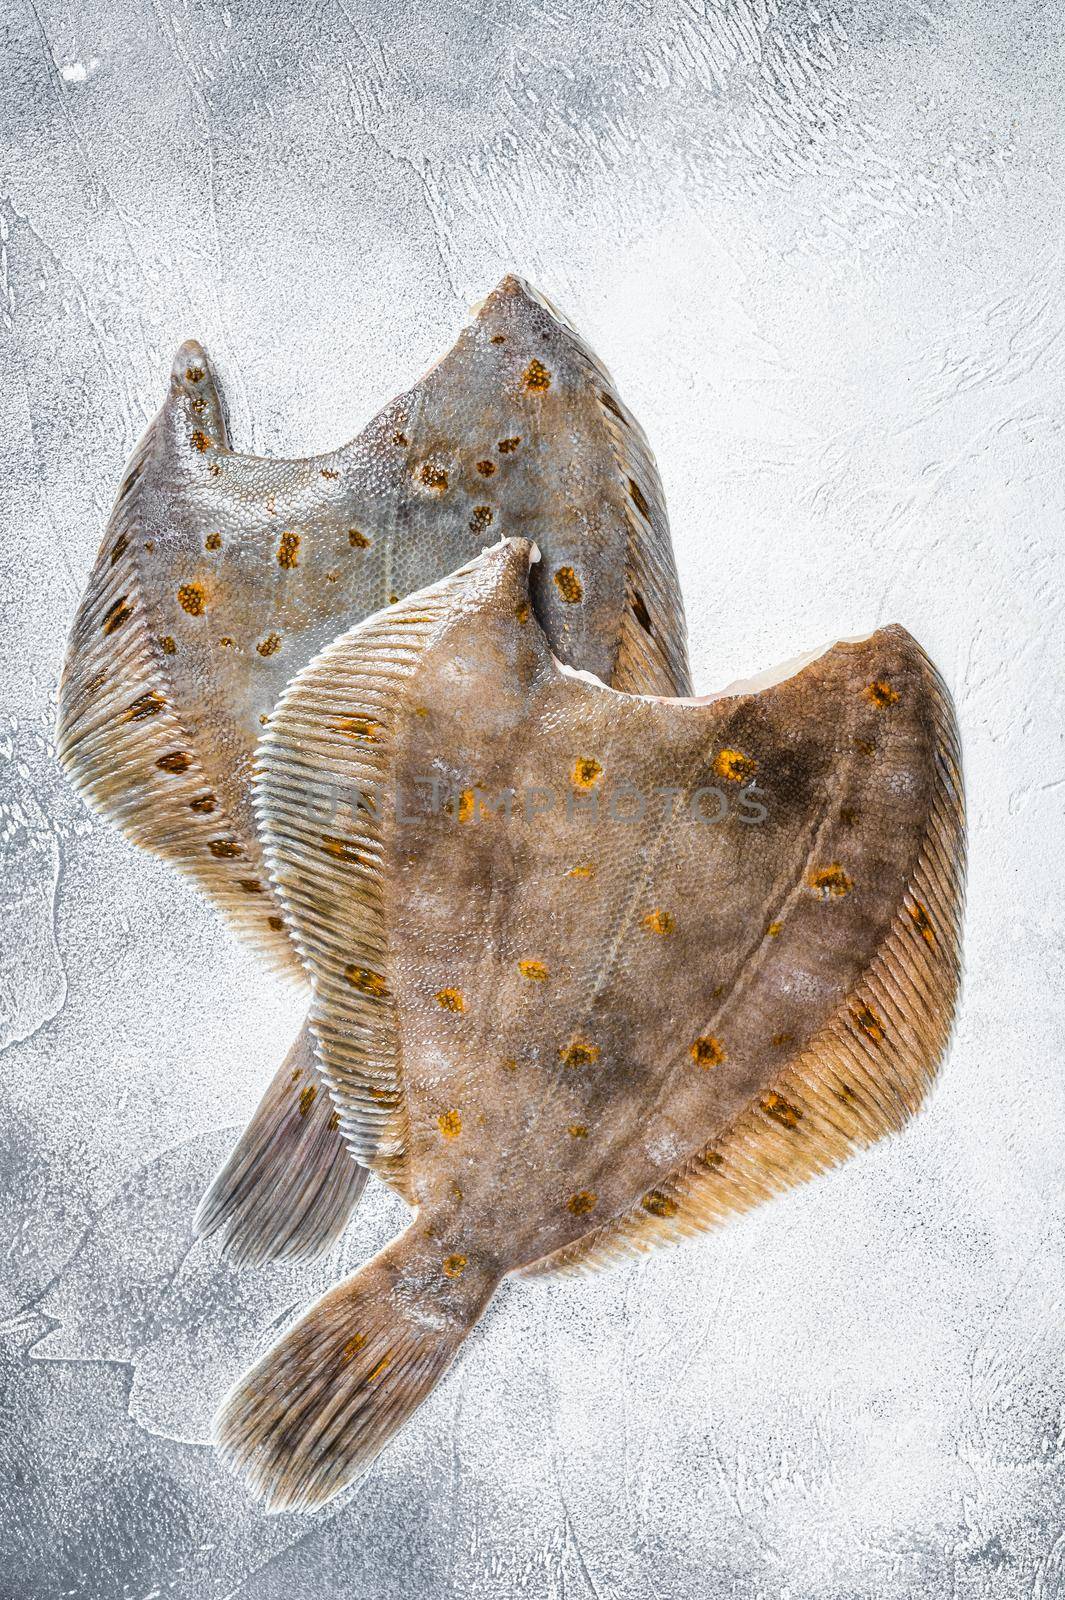 Raw whole flounder flatfish fish on kitchen table. White background. Top view.